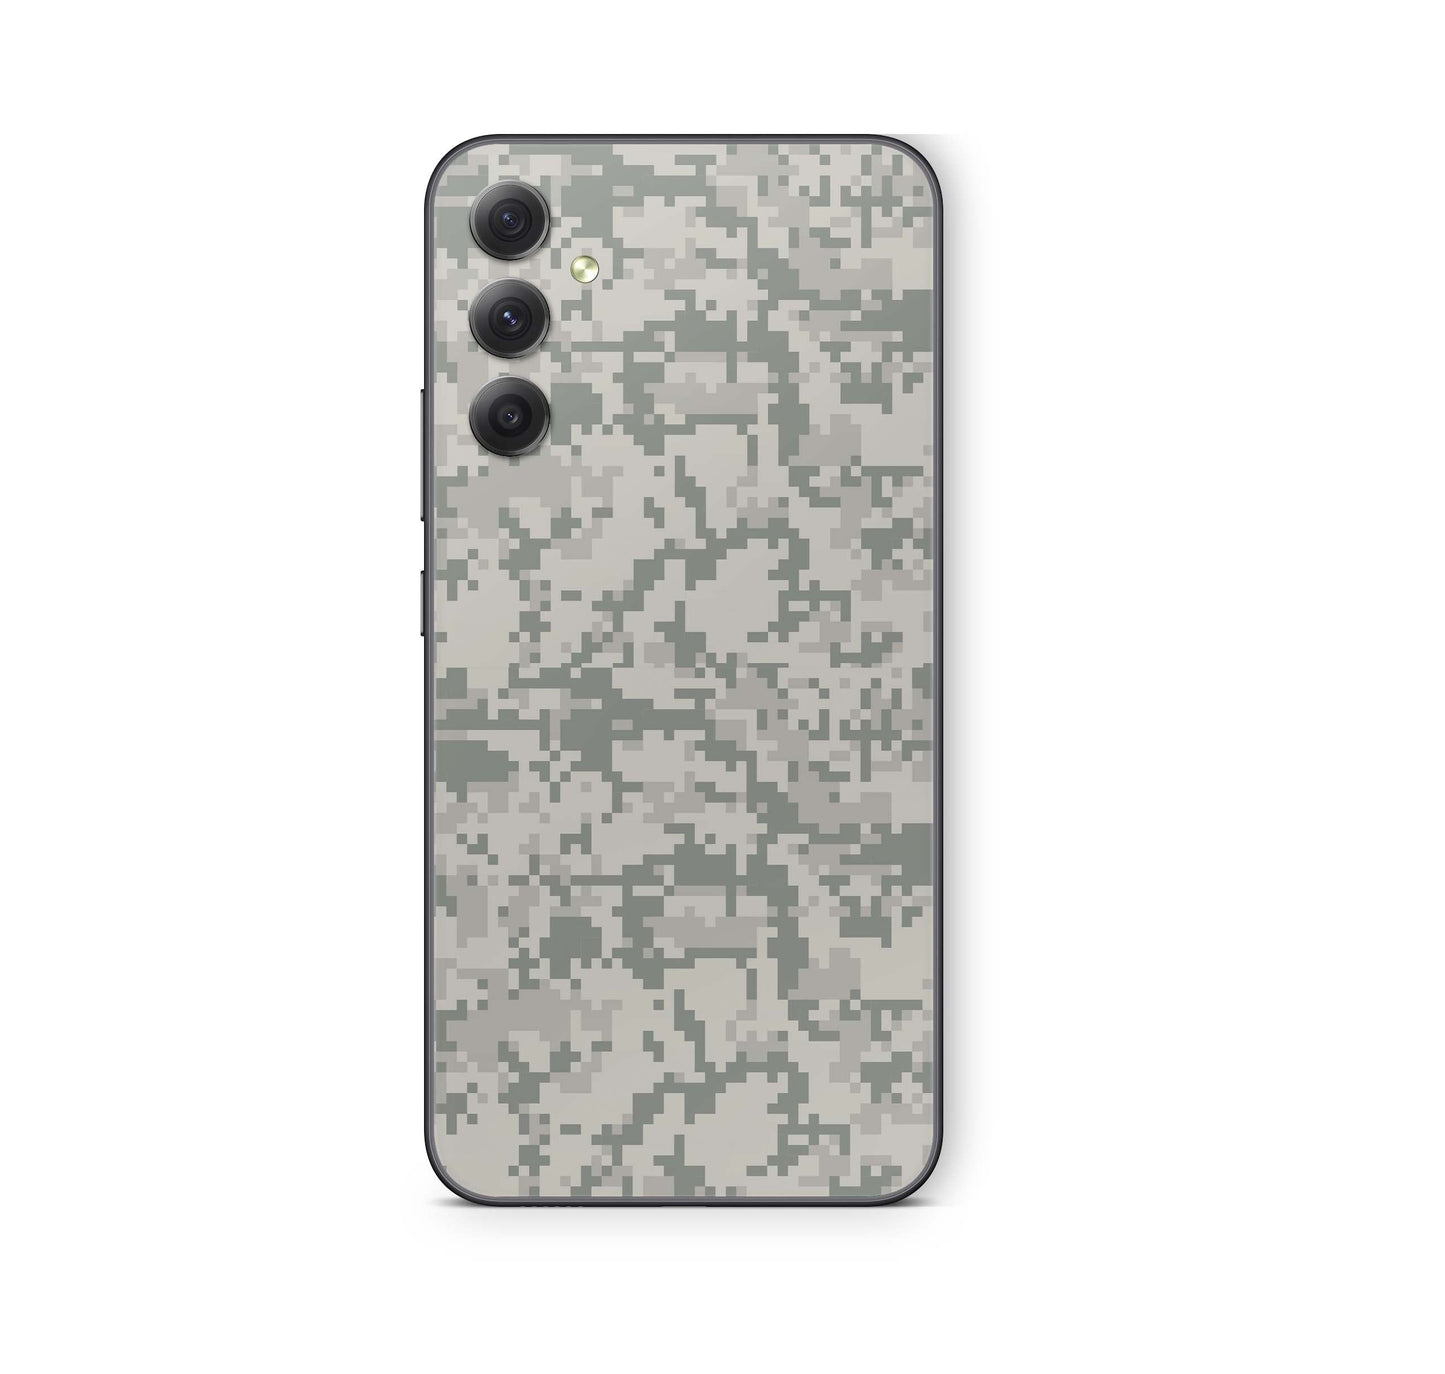 Samsung Galaxy A73 Skin Schutzfolie Aufkleber Skins Design Acu Camo Elektronik-Sticker & -Aufkleber skins4u   